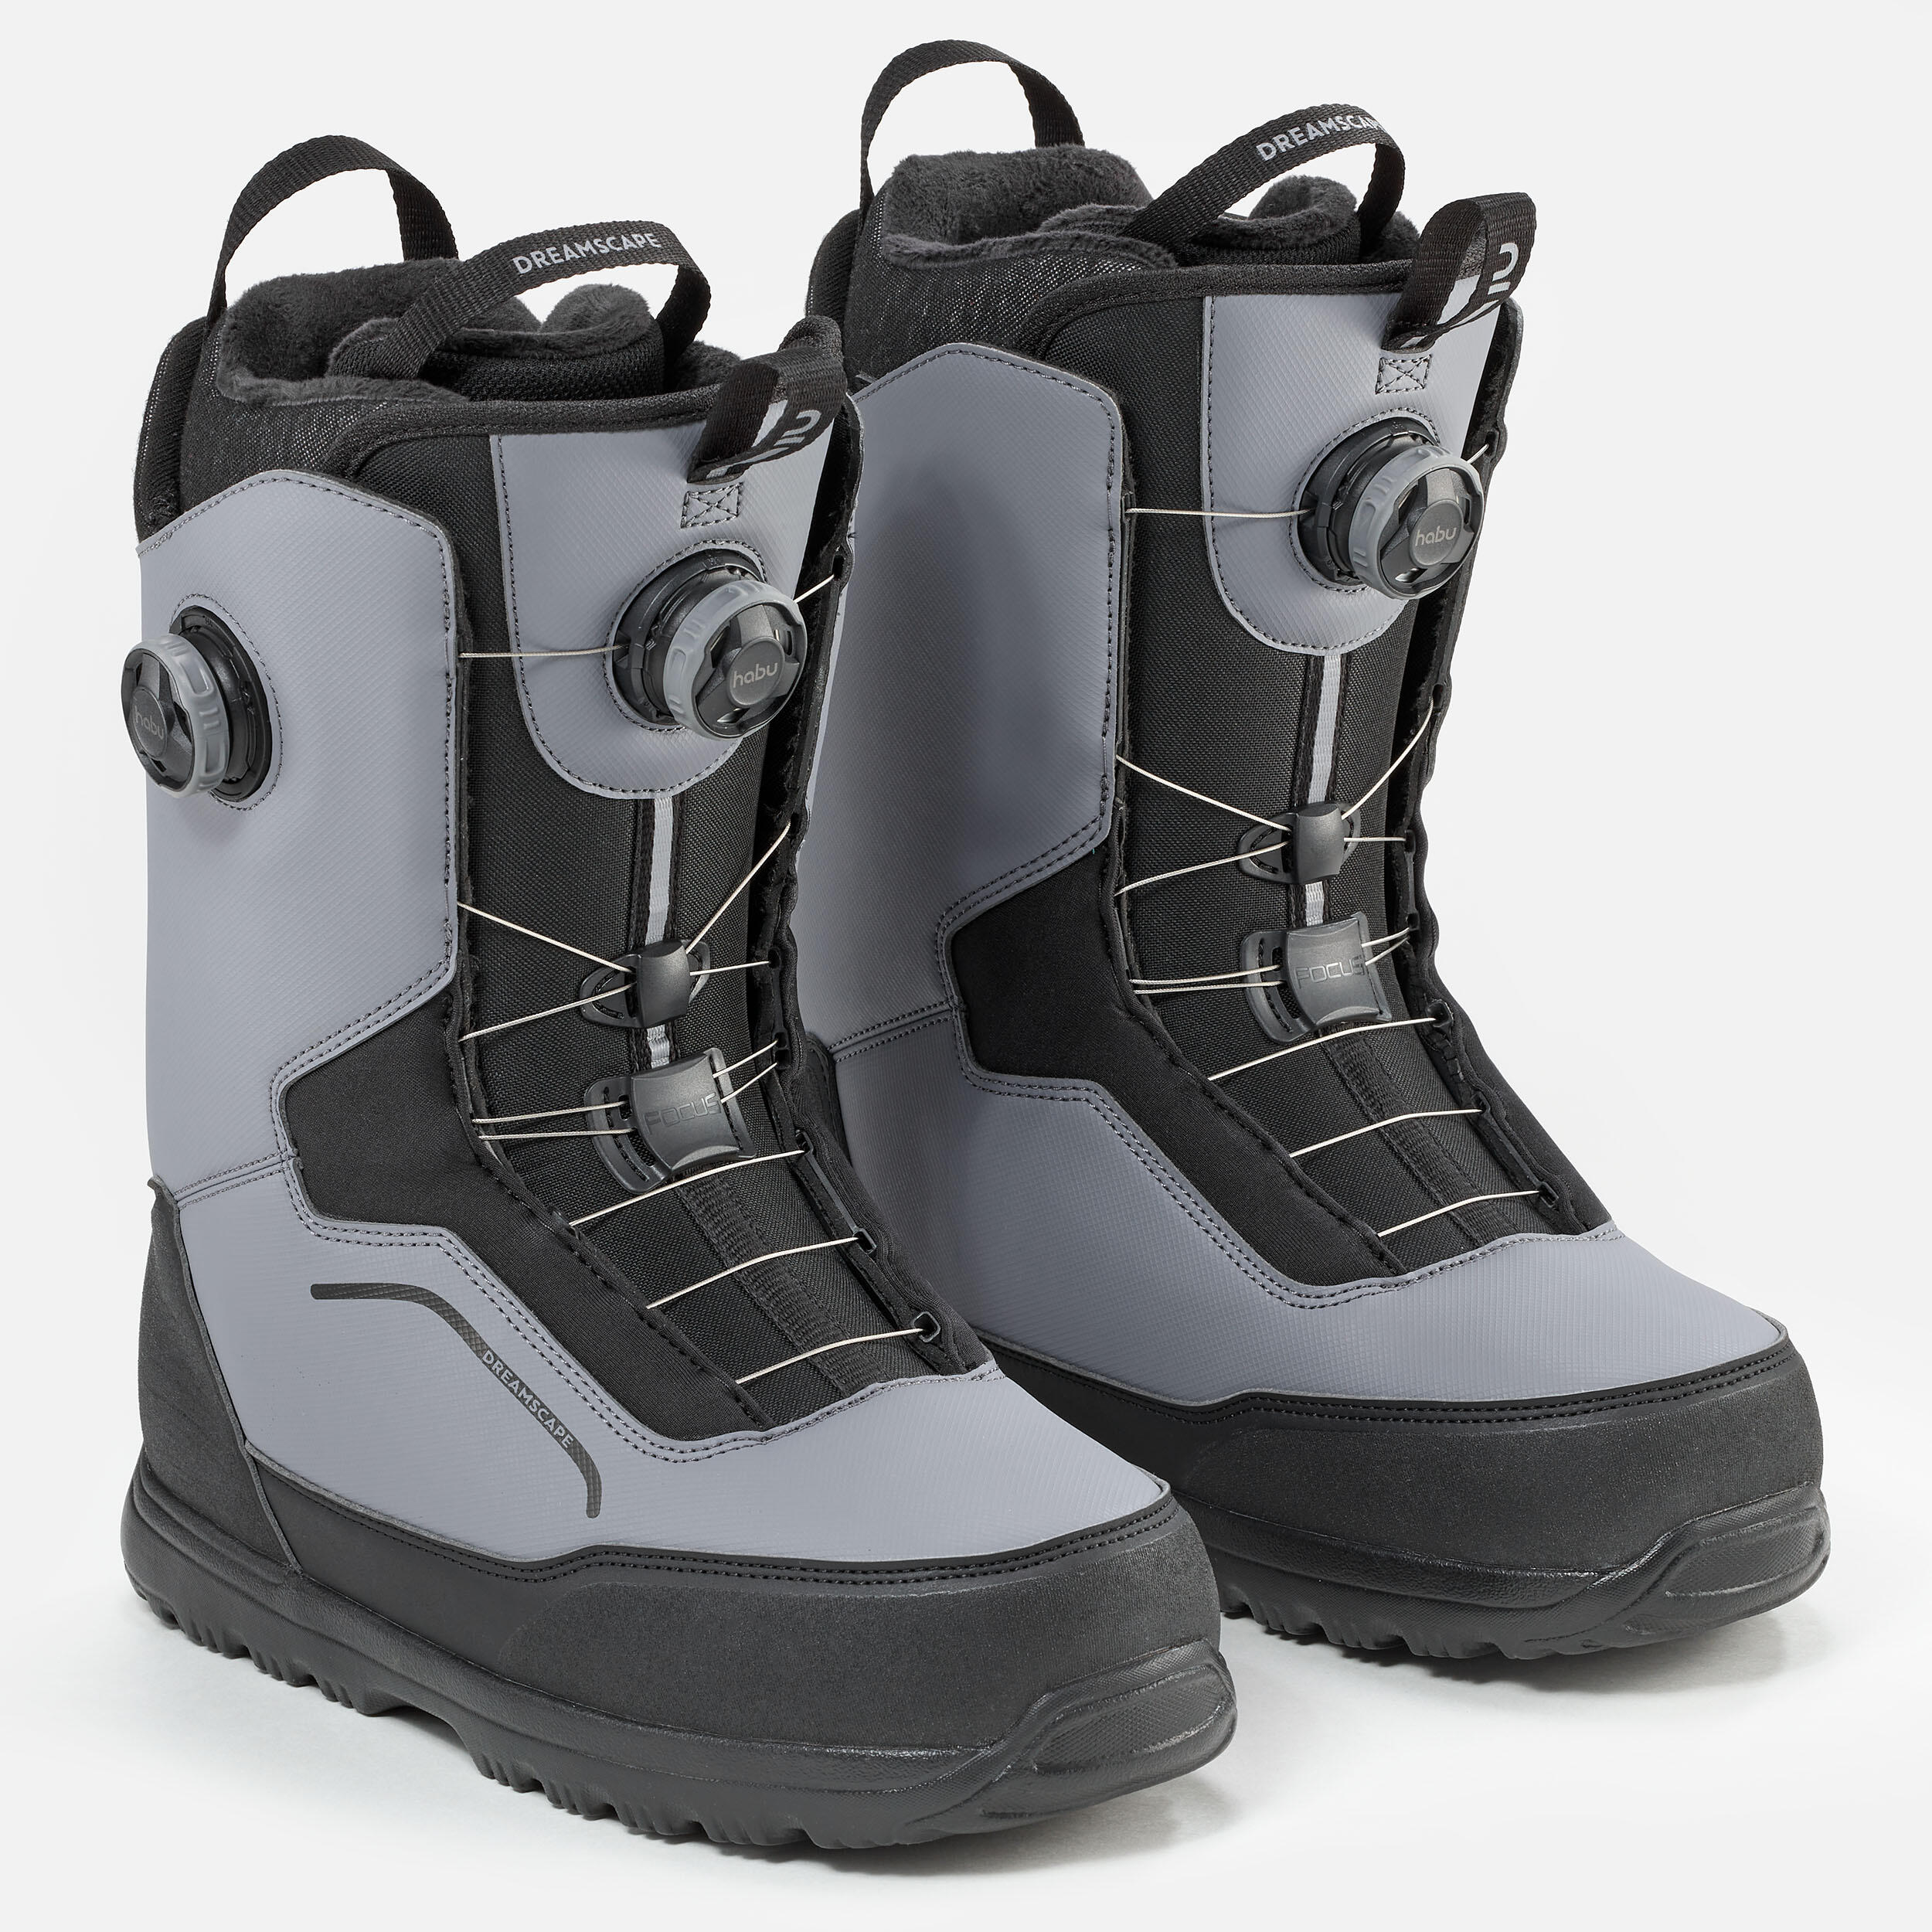 Double wheel snowboard boots, rigid flex - Allroad 900 Grey 8/15